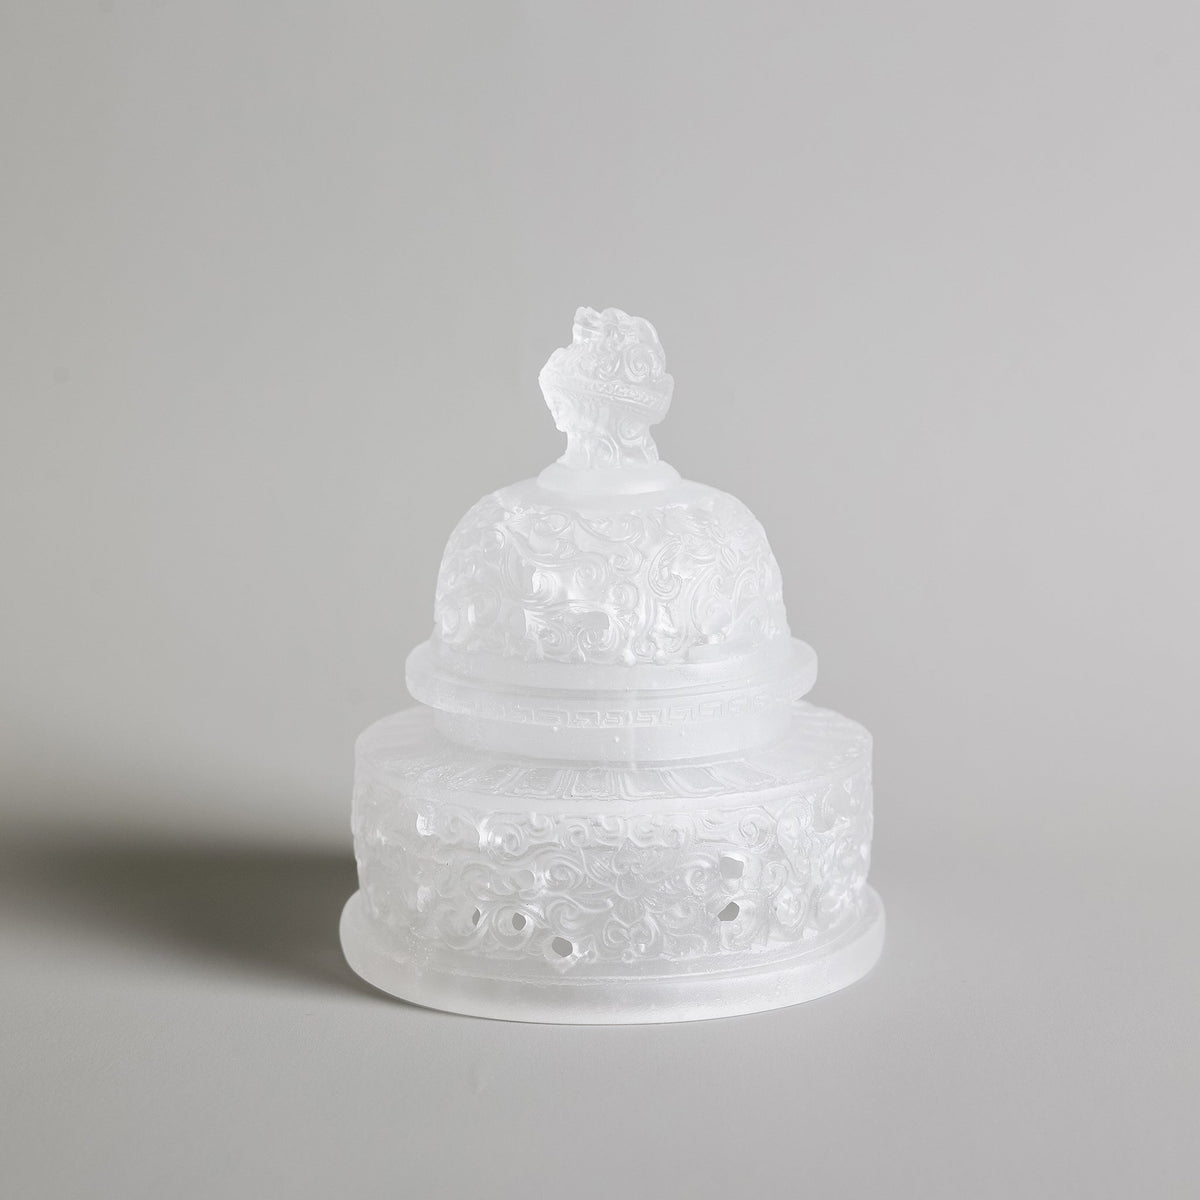 The liuli crystal lid of a powder incense burner